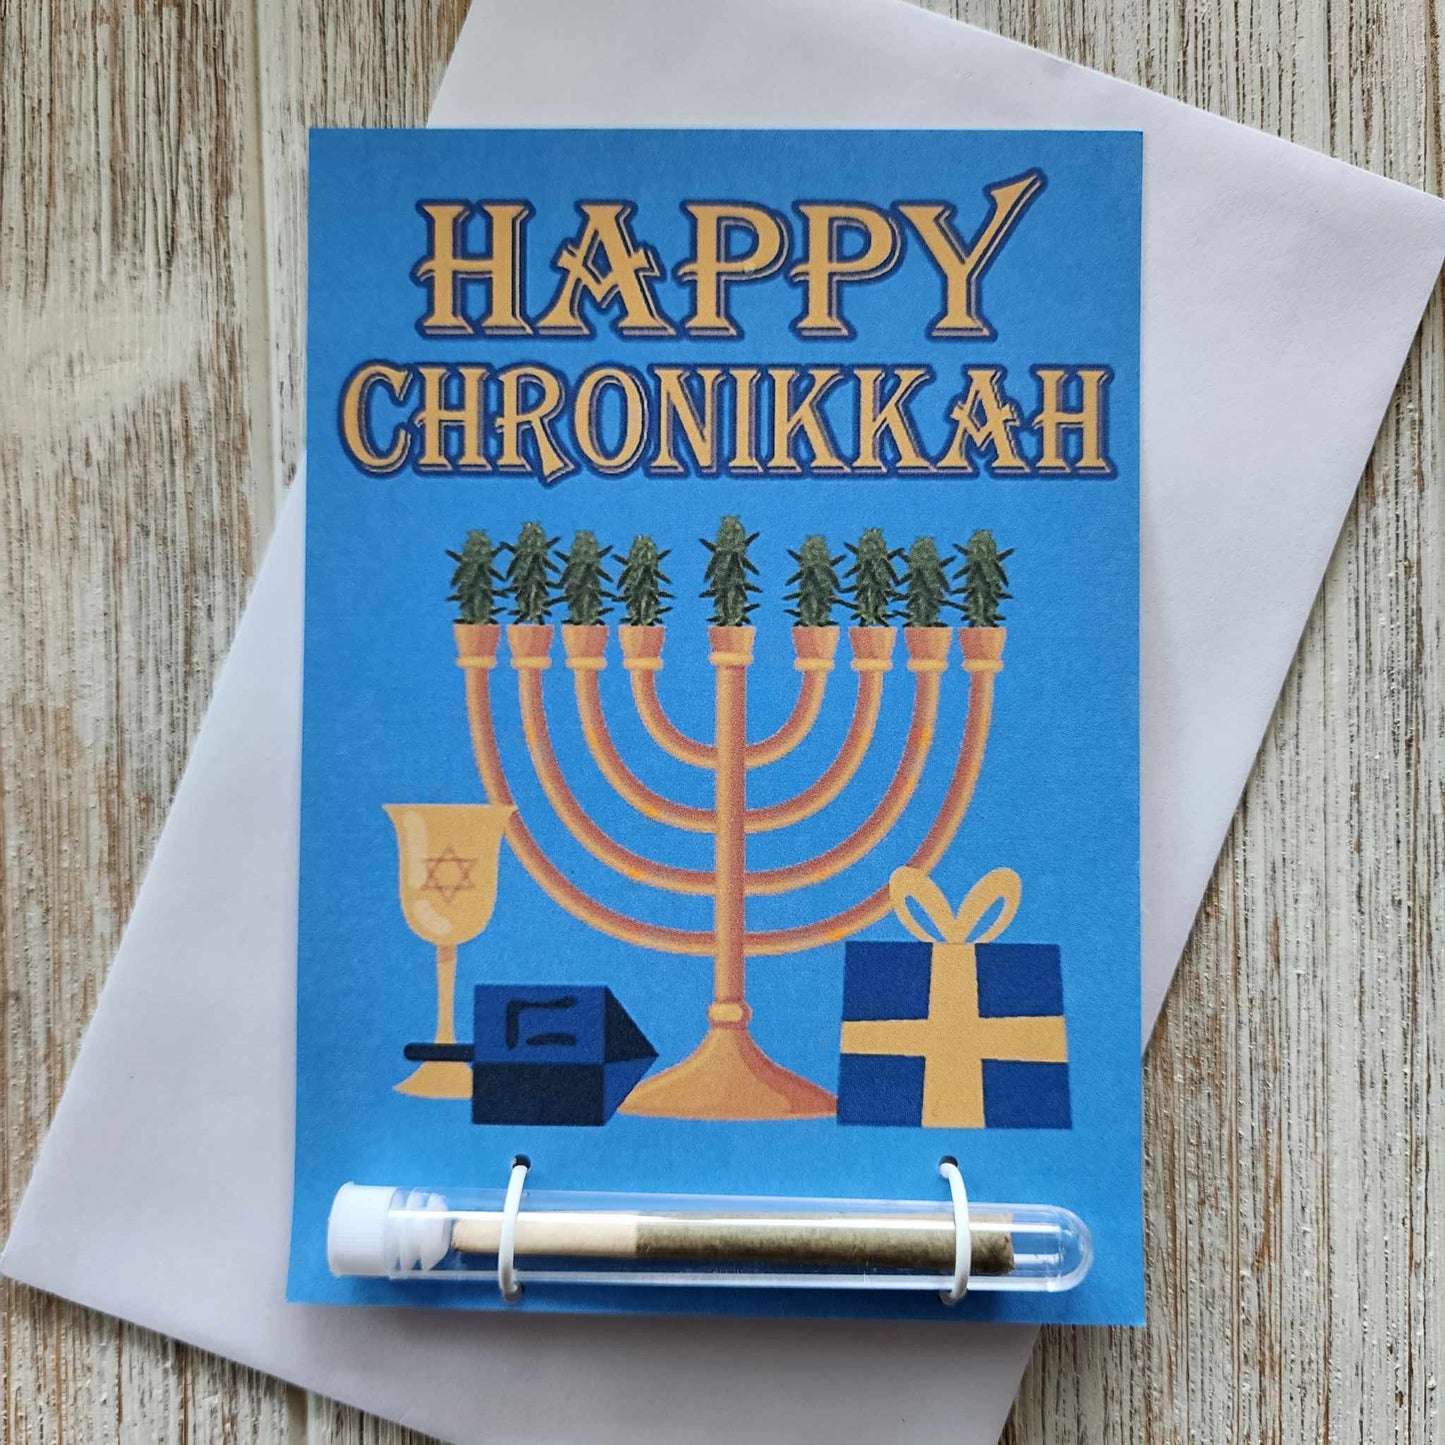 Happy Chronikkah Greeting Card